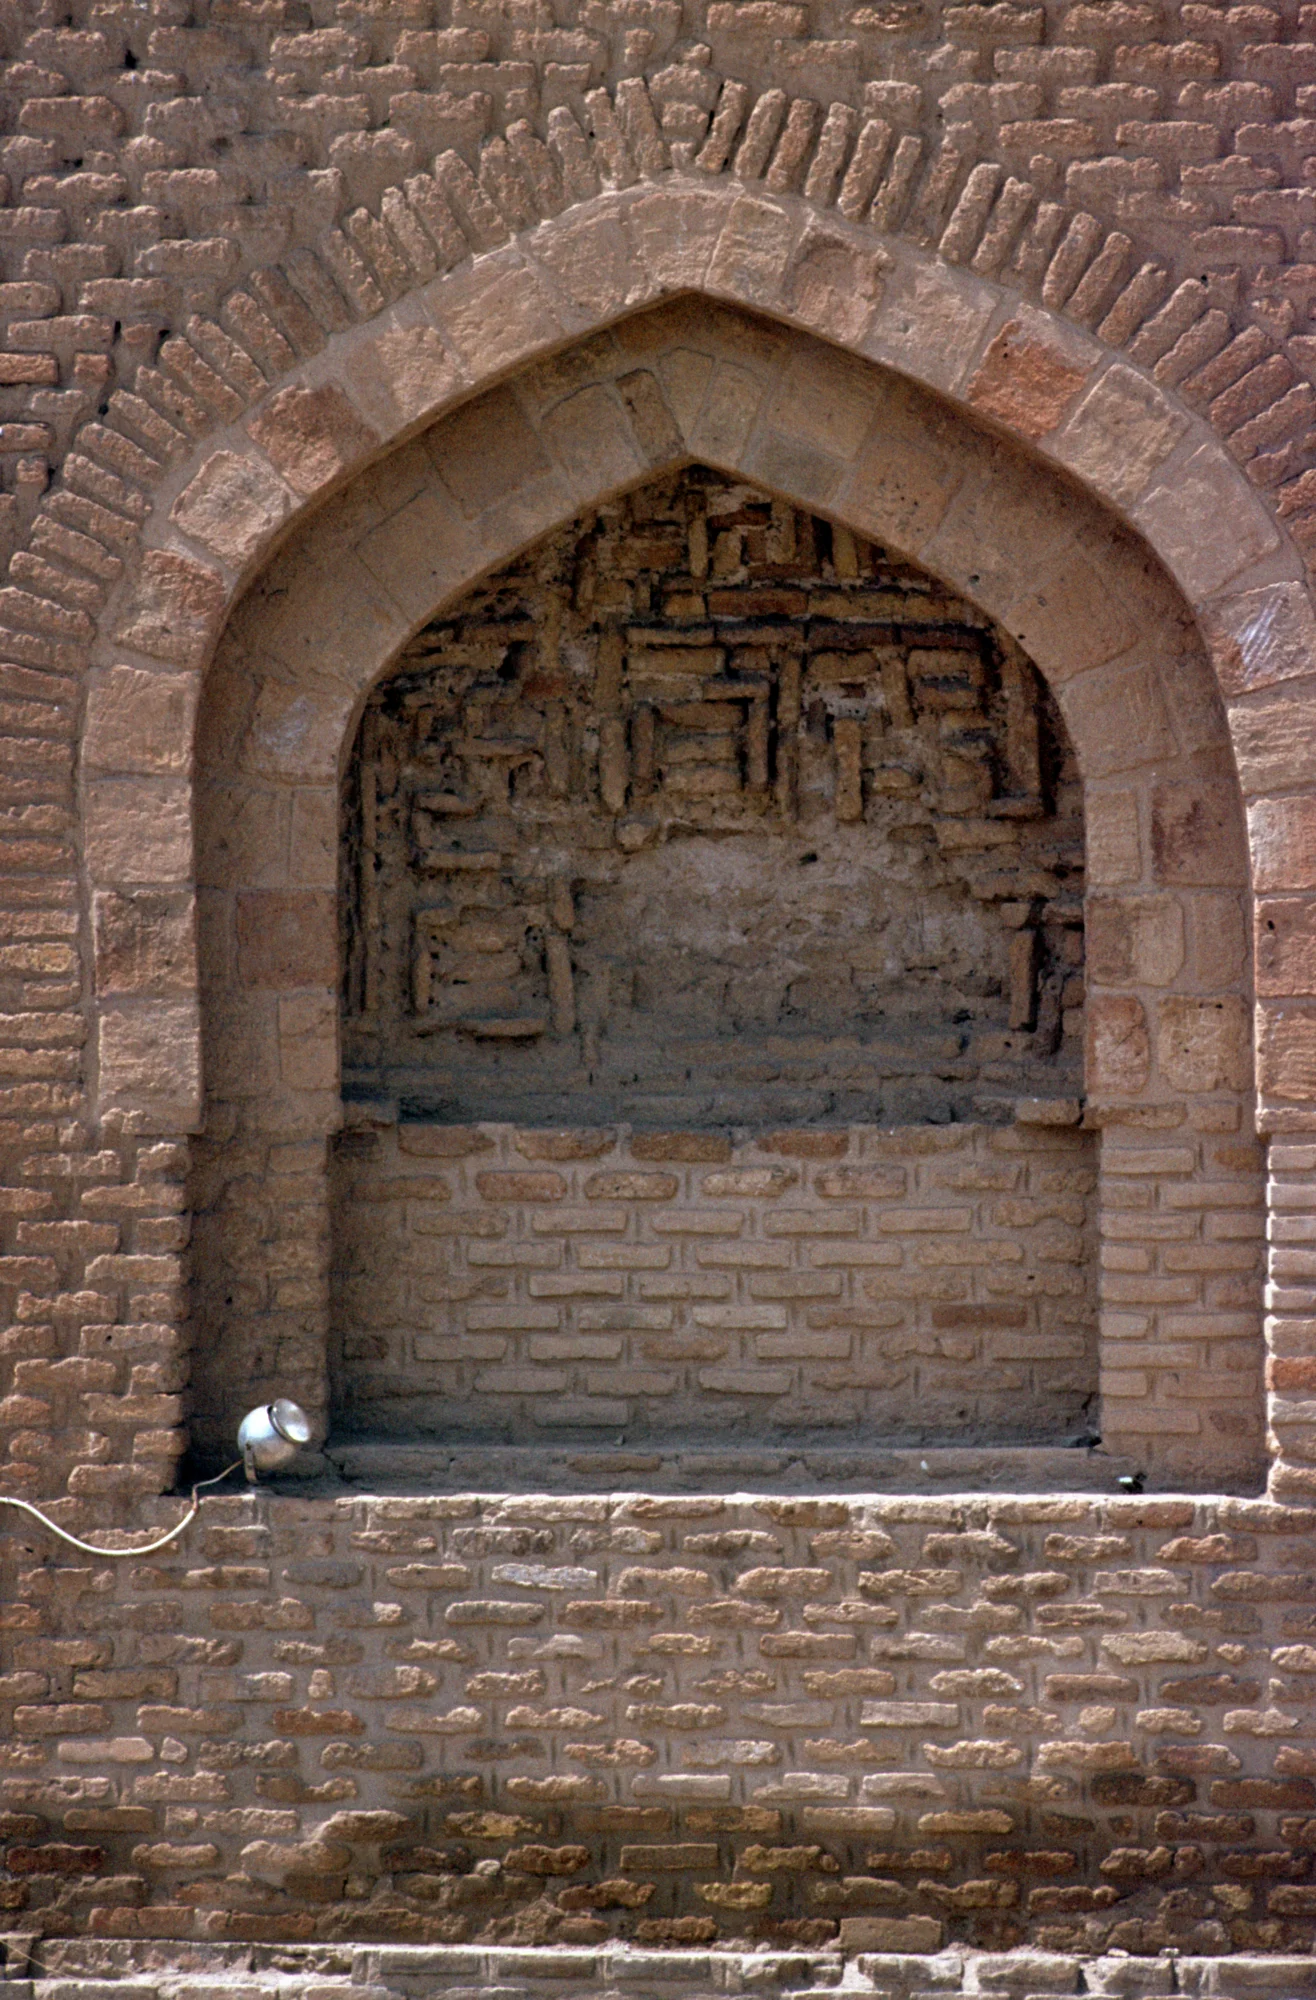 Raqqa, Baghdad Gate, geometric decorations in the niche, built with bricks